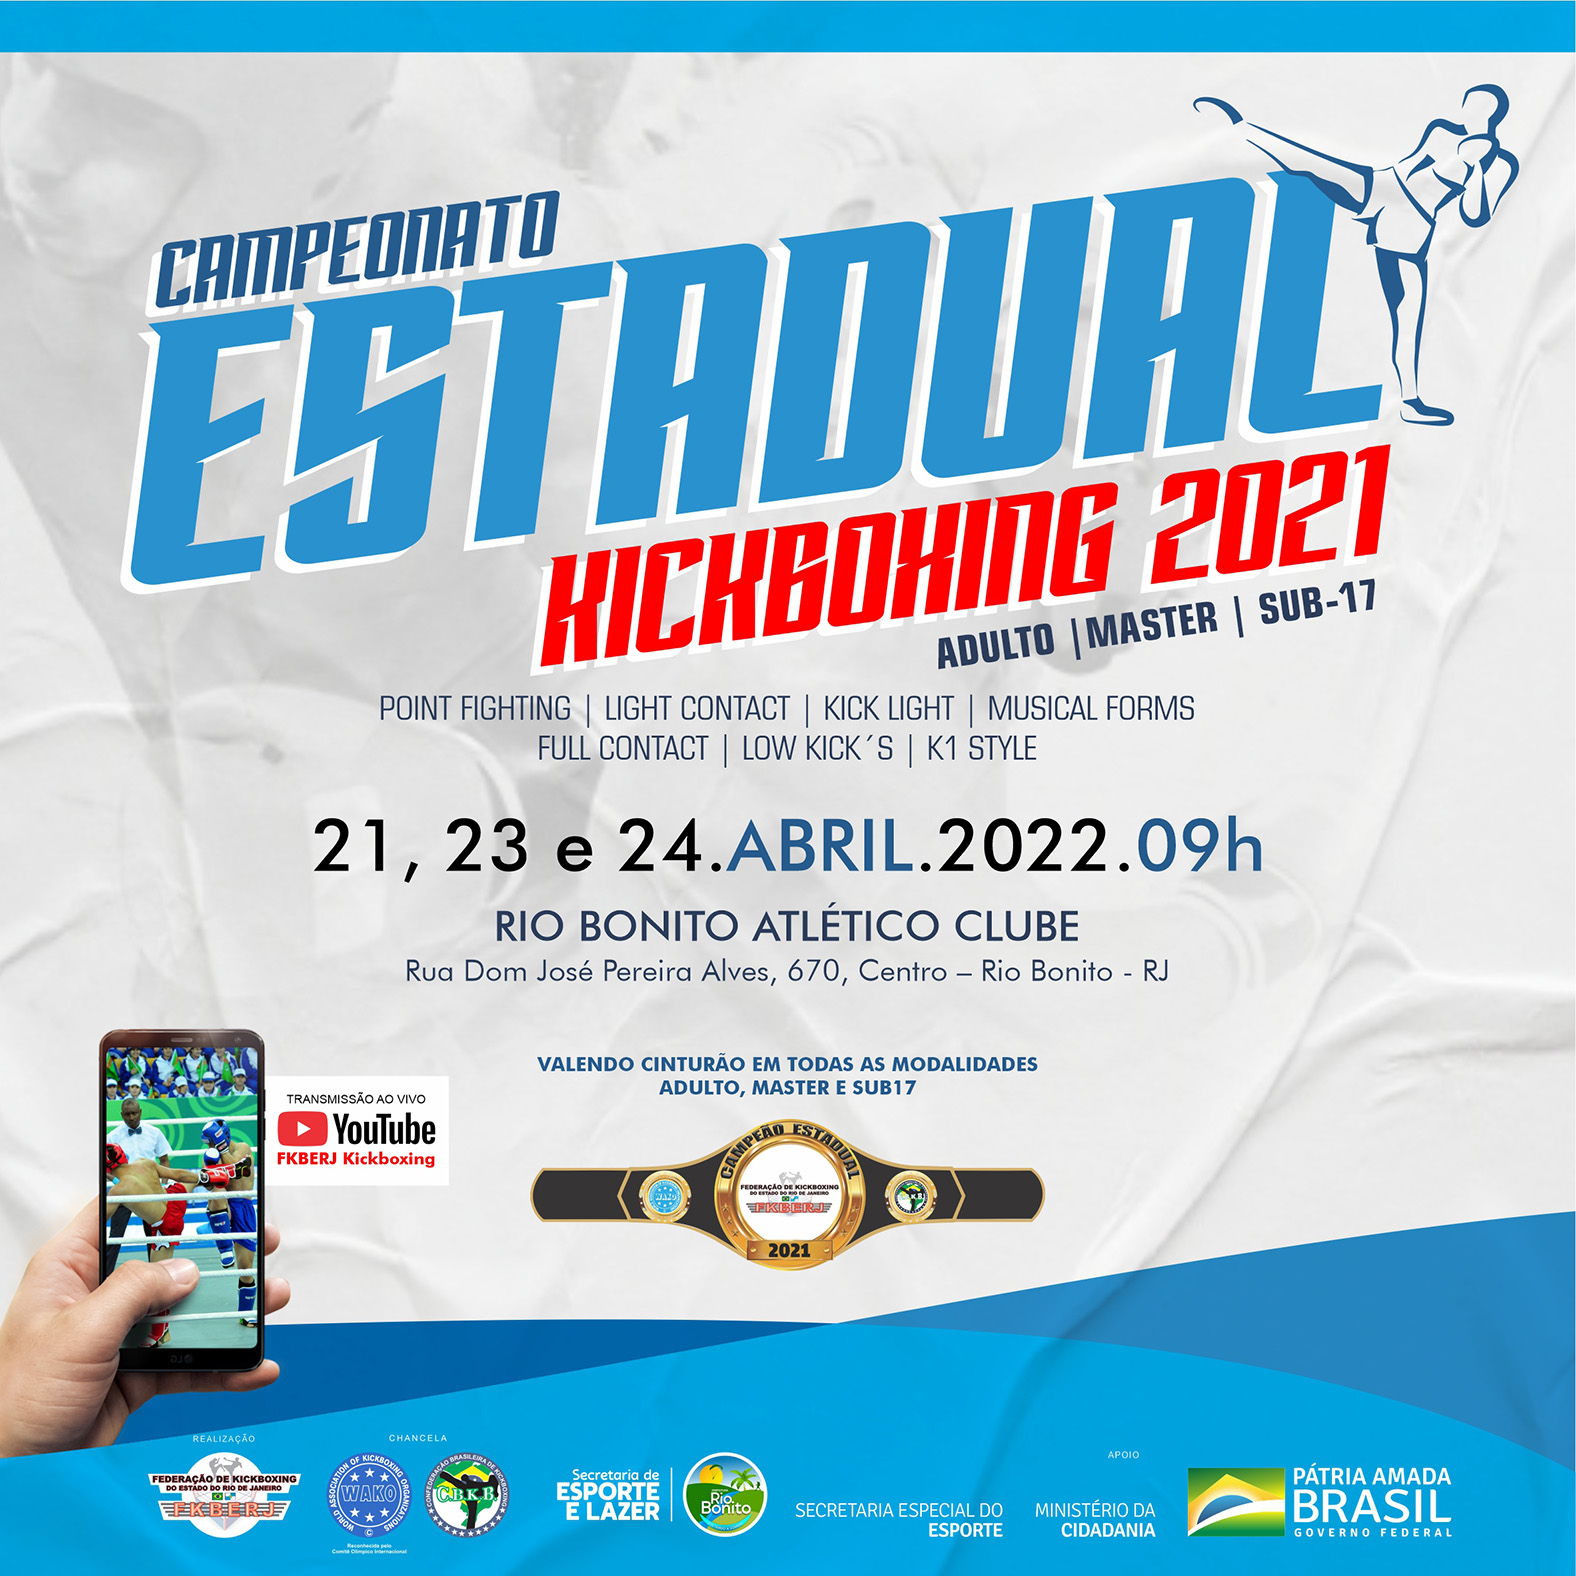 Campeonato Estadual de Kickboxing 2021, seletiva para o Brasileiro